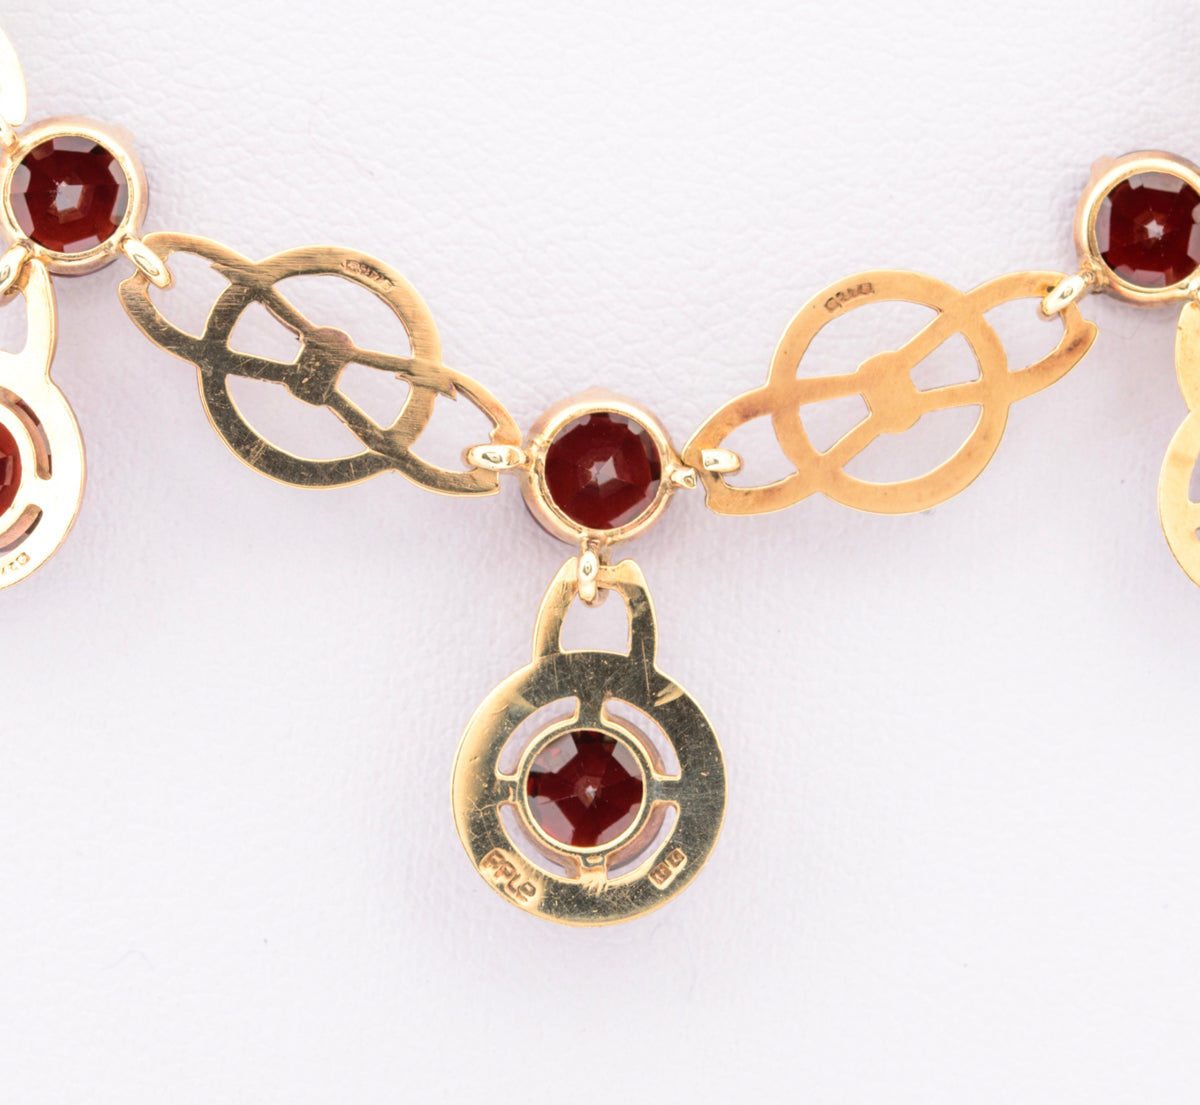 Vintage 9ct Gold & Garnet Modernist Necklace Original Box & Receipt 1961 (A1518)